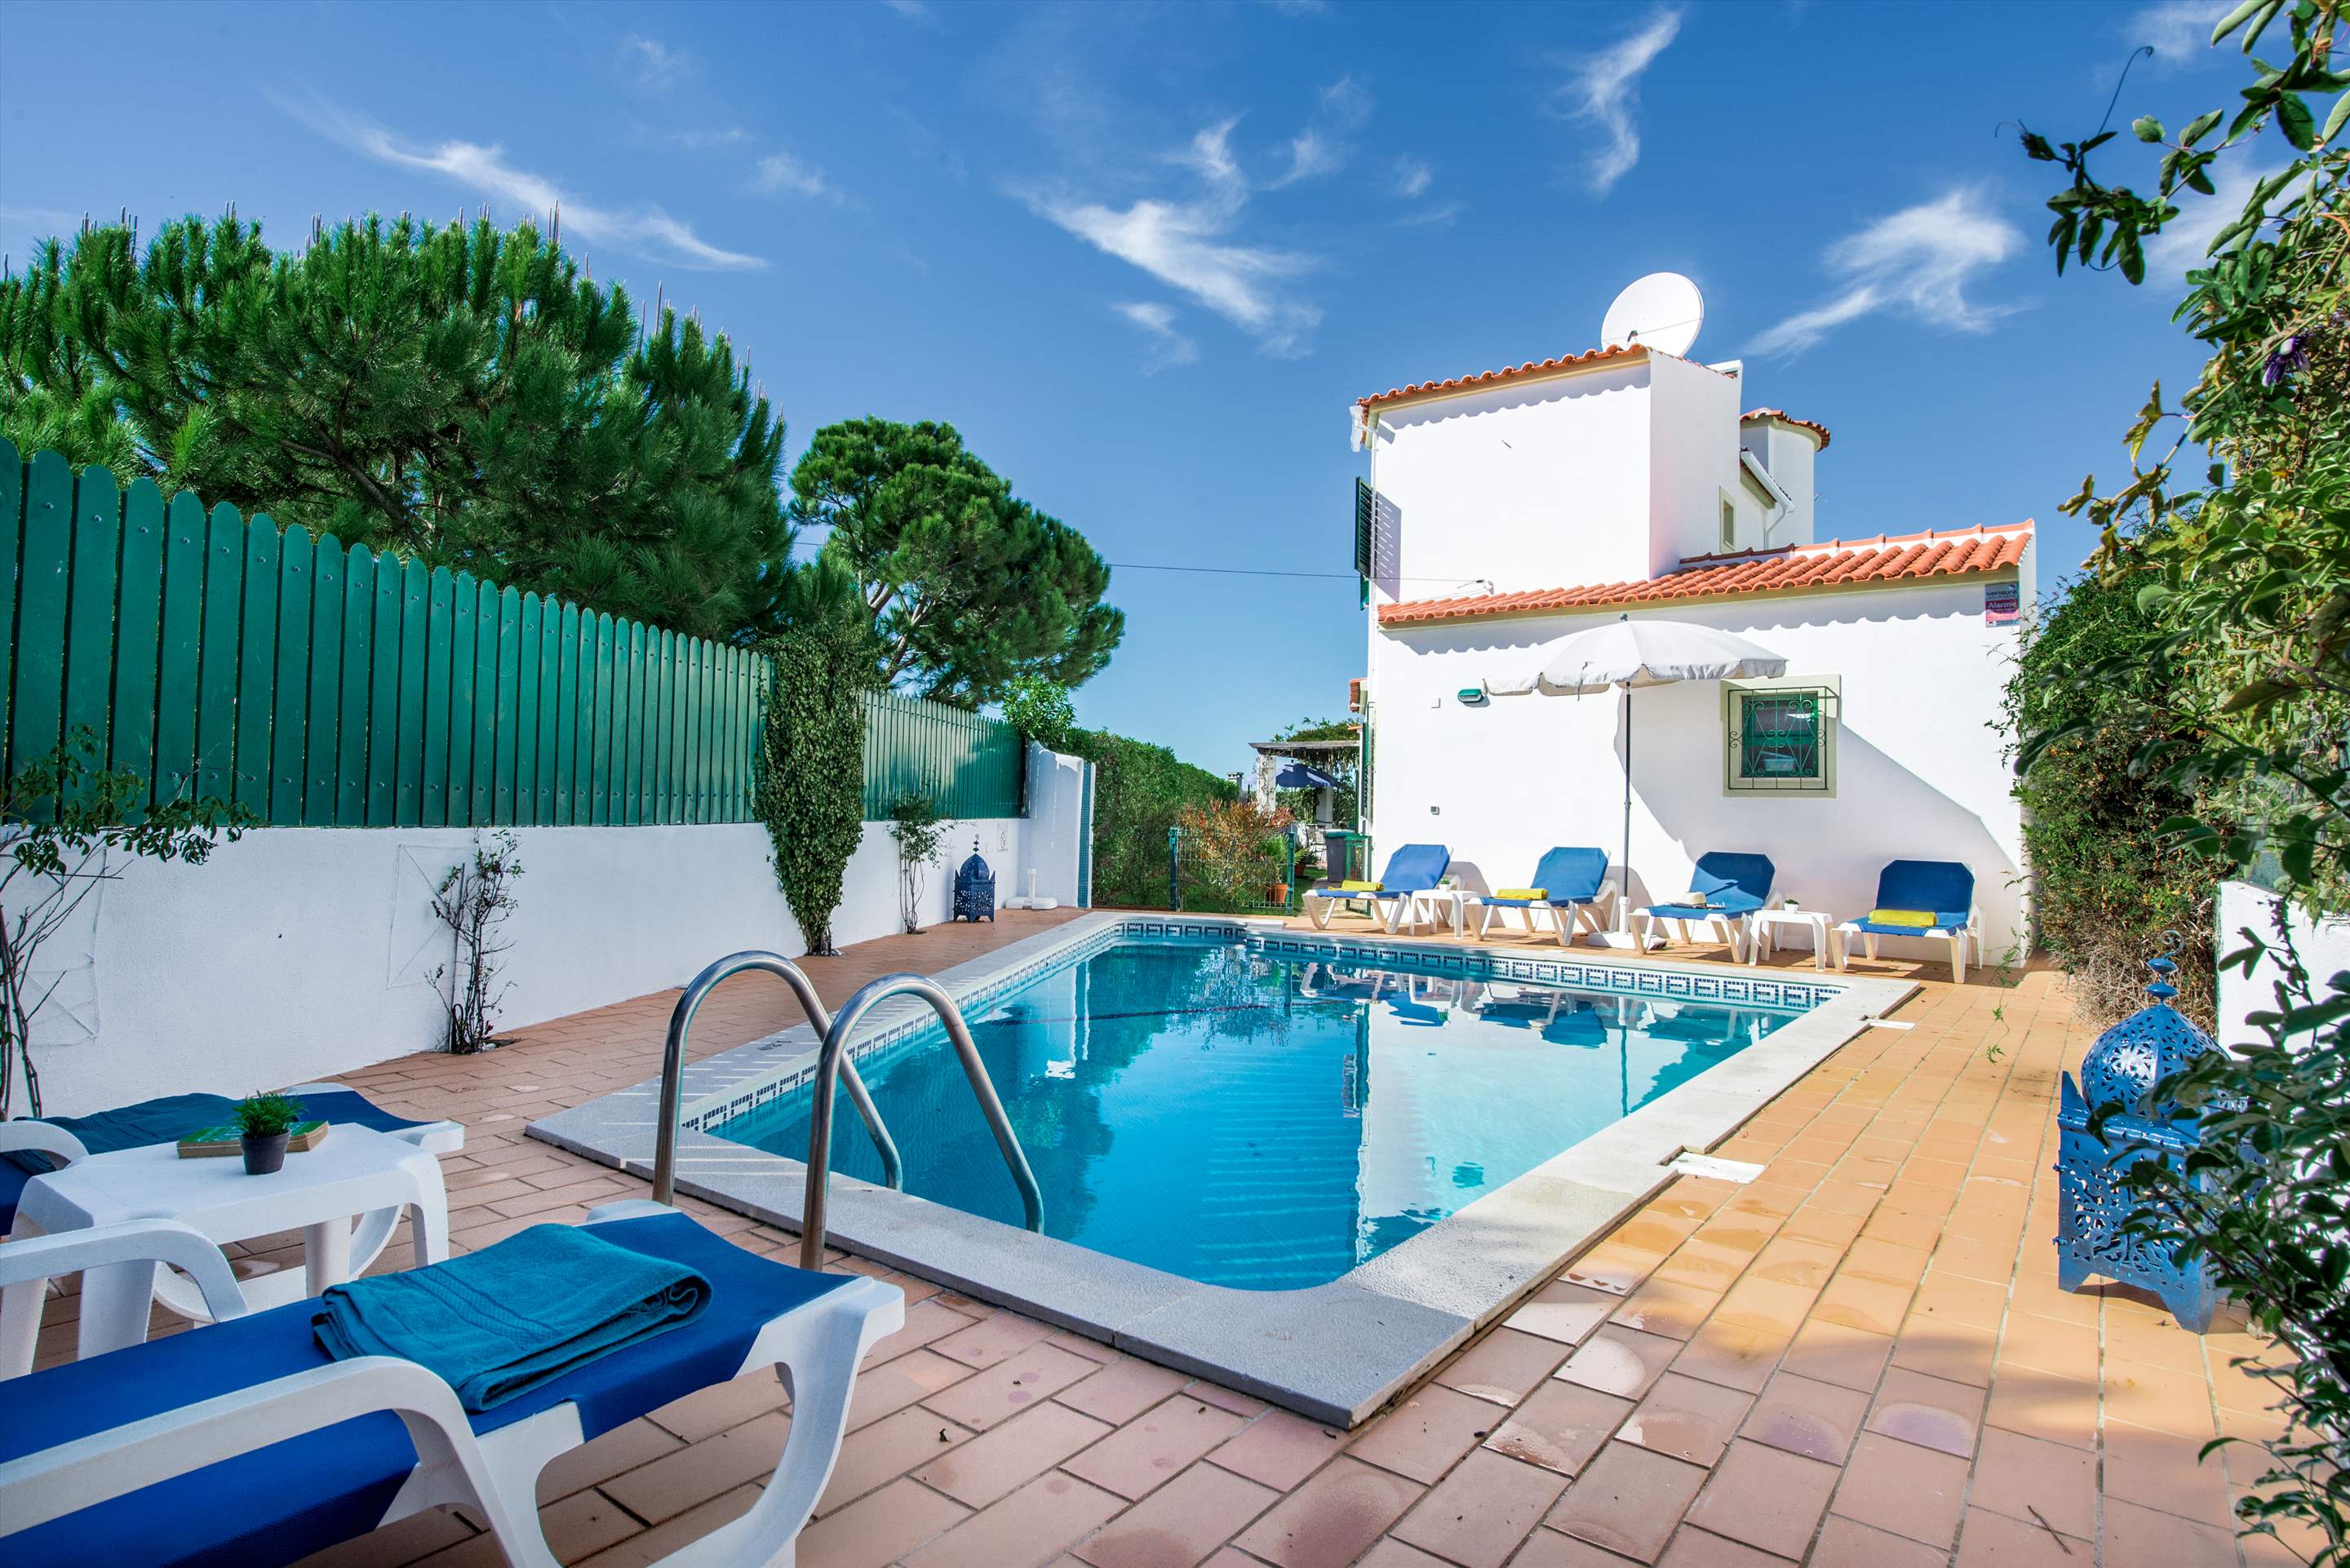 Julieta do Mar, 3 bedroom villa in Gale, Vale da Parra and Guia, Algarve Photo #1